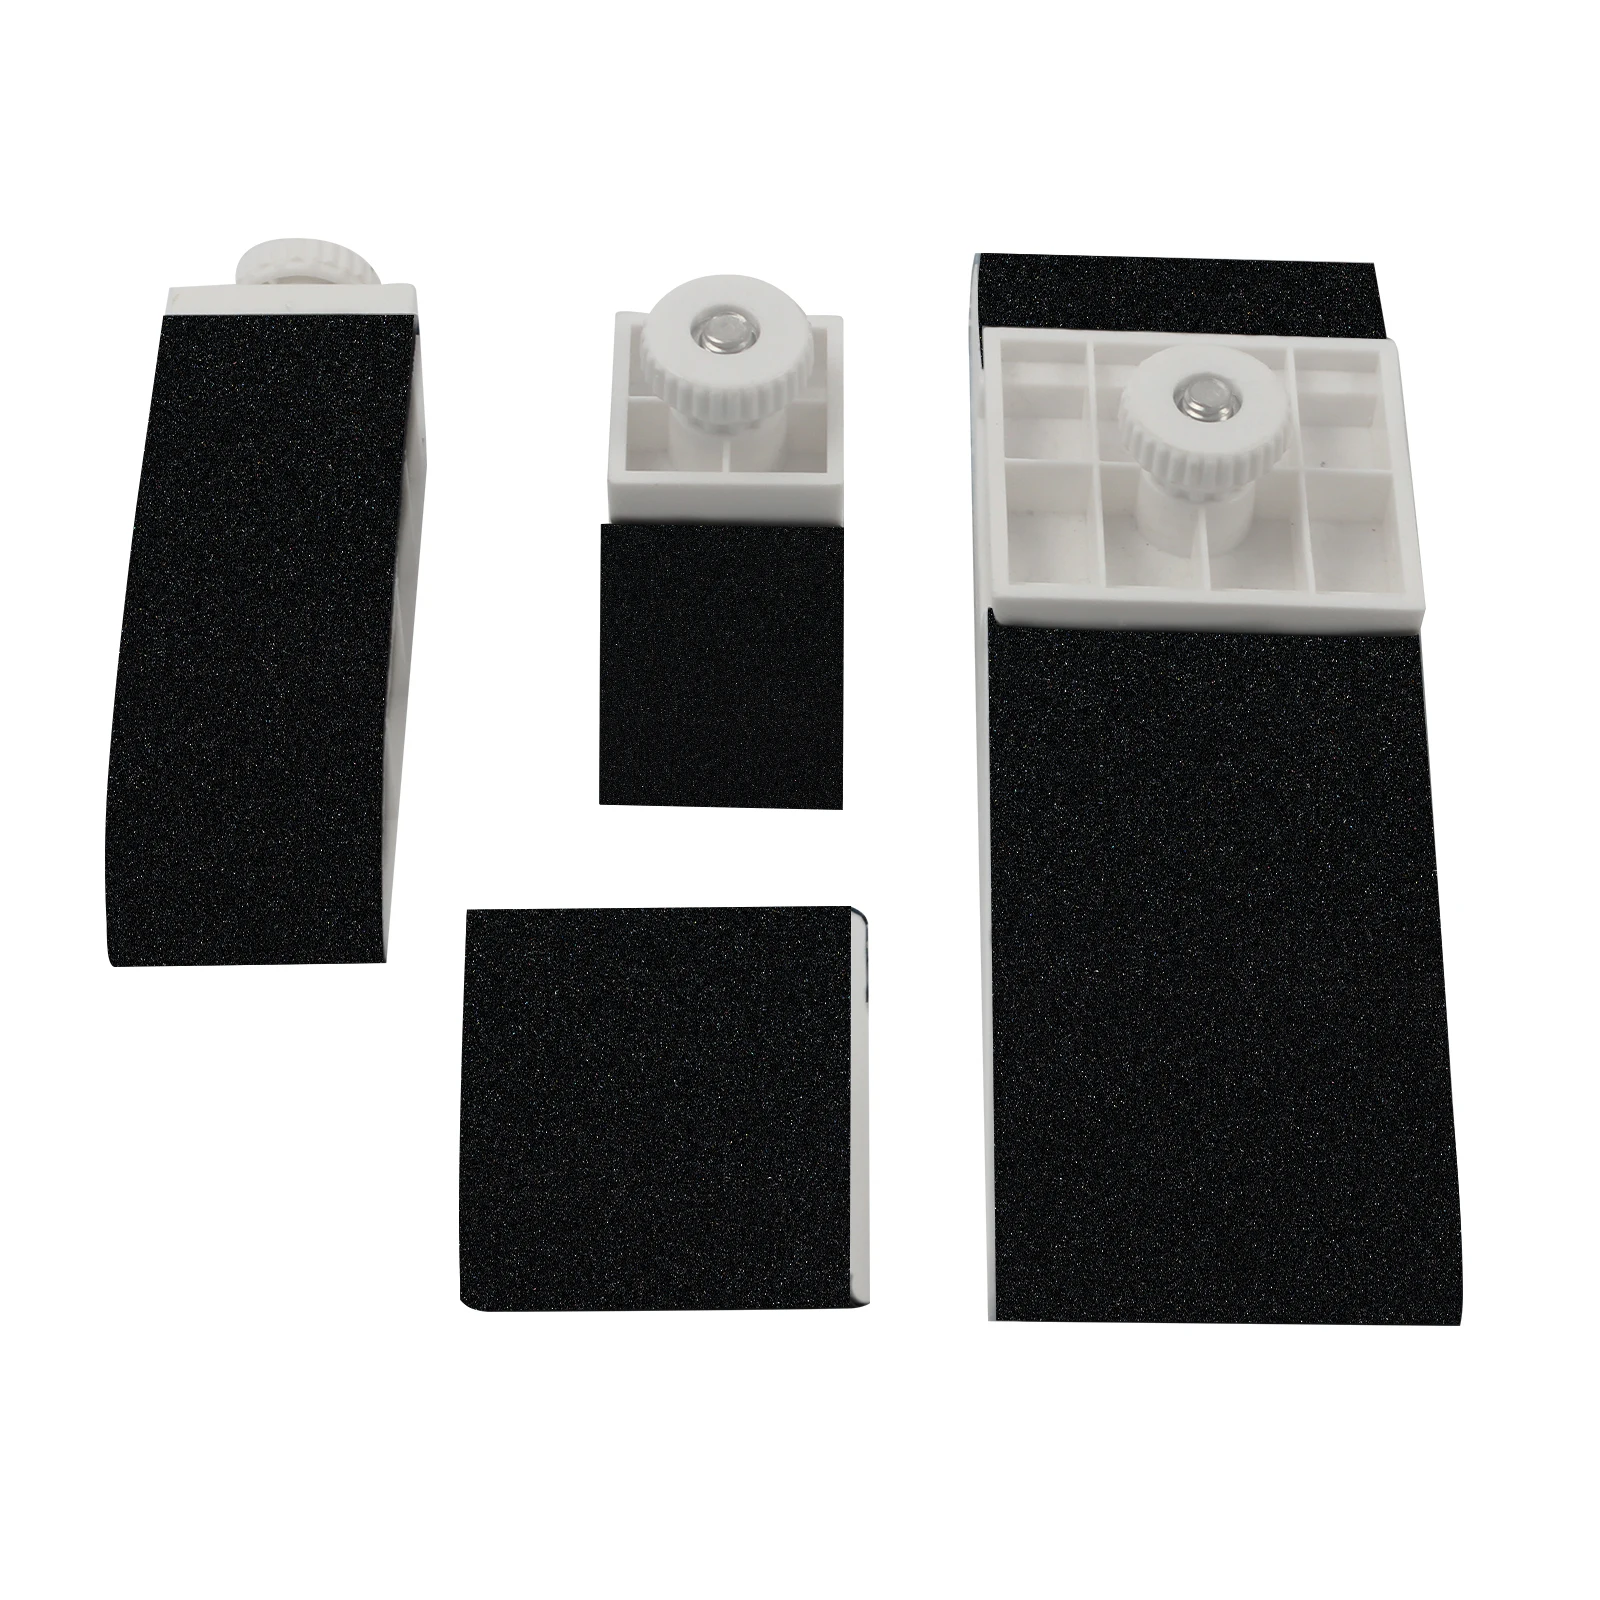 4-Piece Set Sandpaper Holder Tool Sanding Block Hand Sander  for Wood, Drywall, Metal, Auto Body Polishing